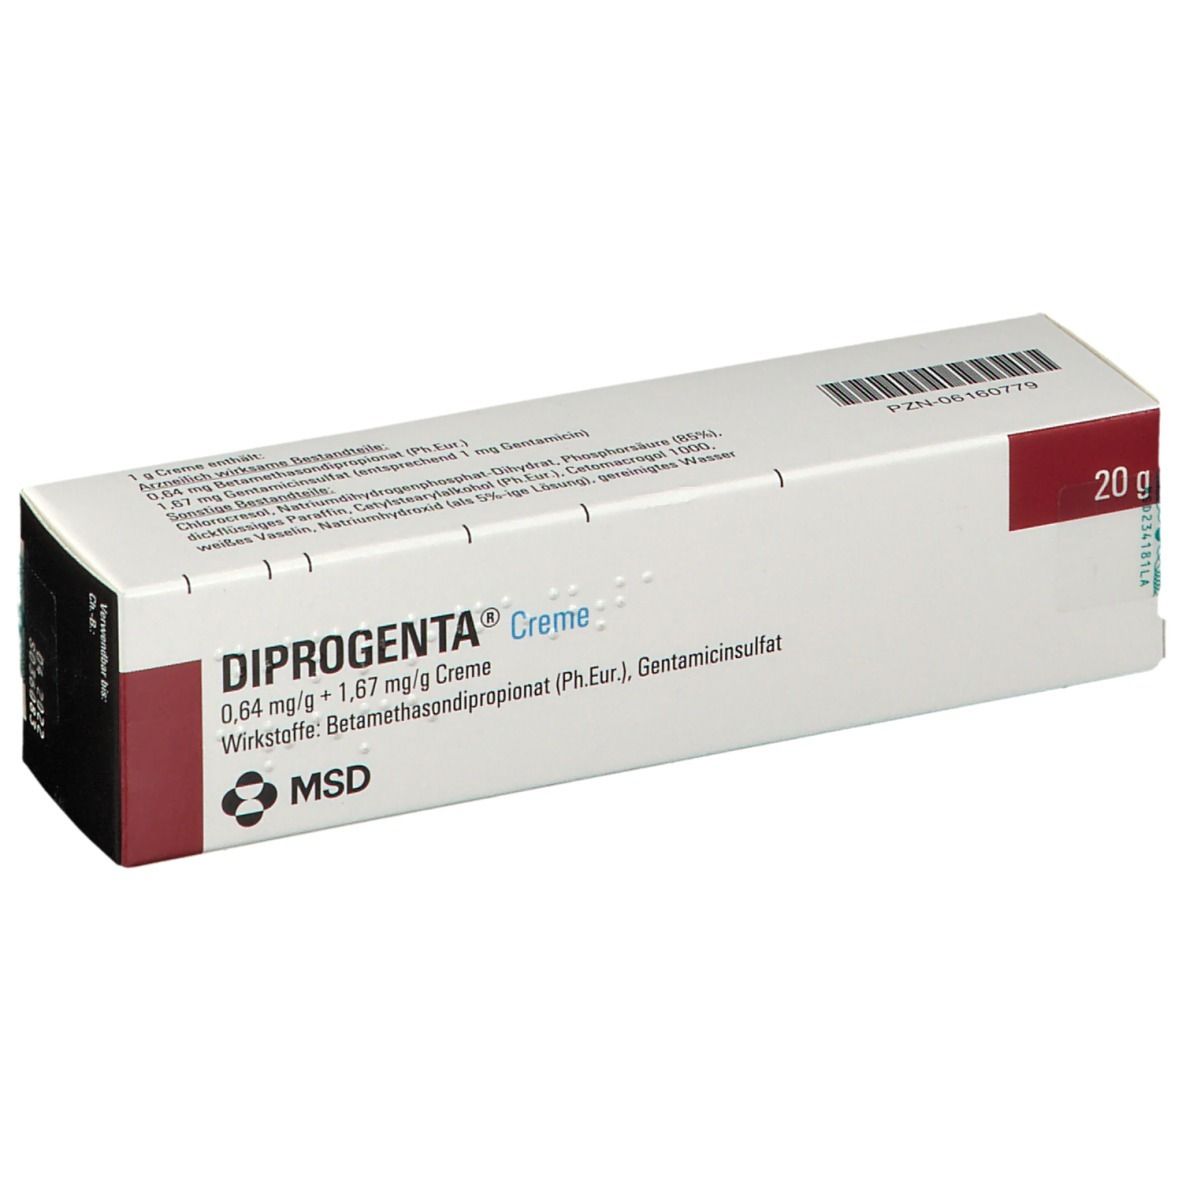 DIPROGENTA® Creme 0,64 mg/g + 1,67mg/g